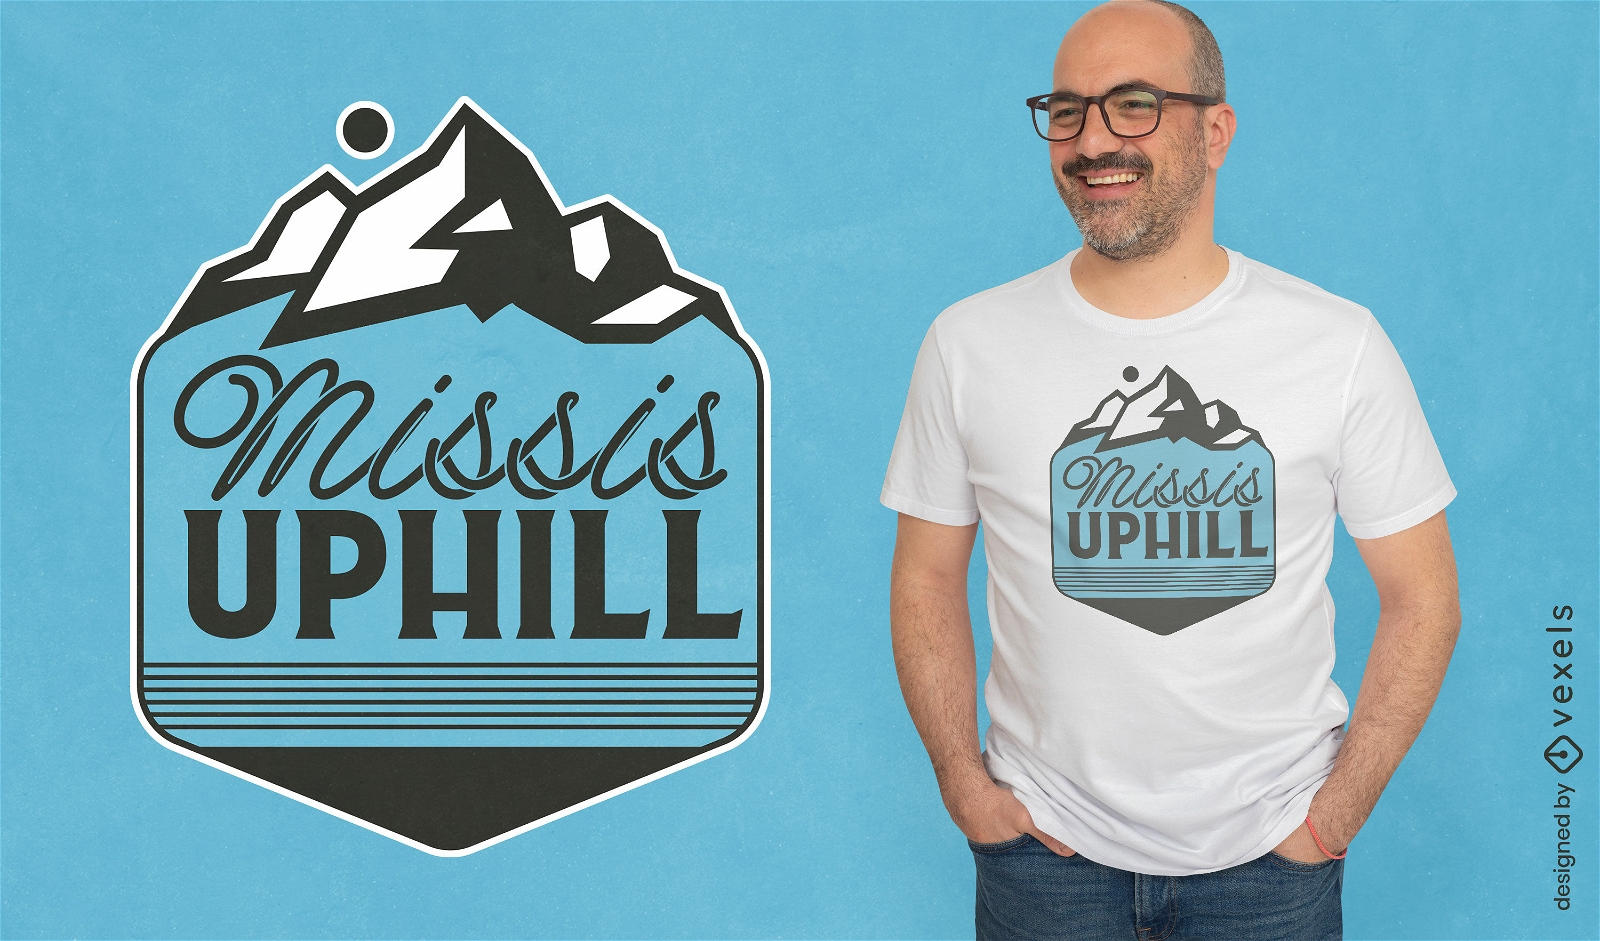 Mountain badge mister uphill t-shirt design